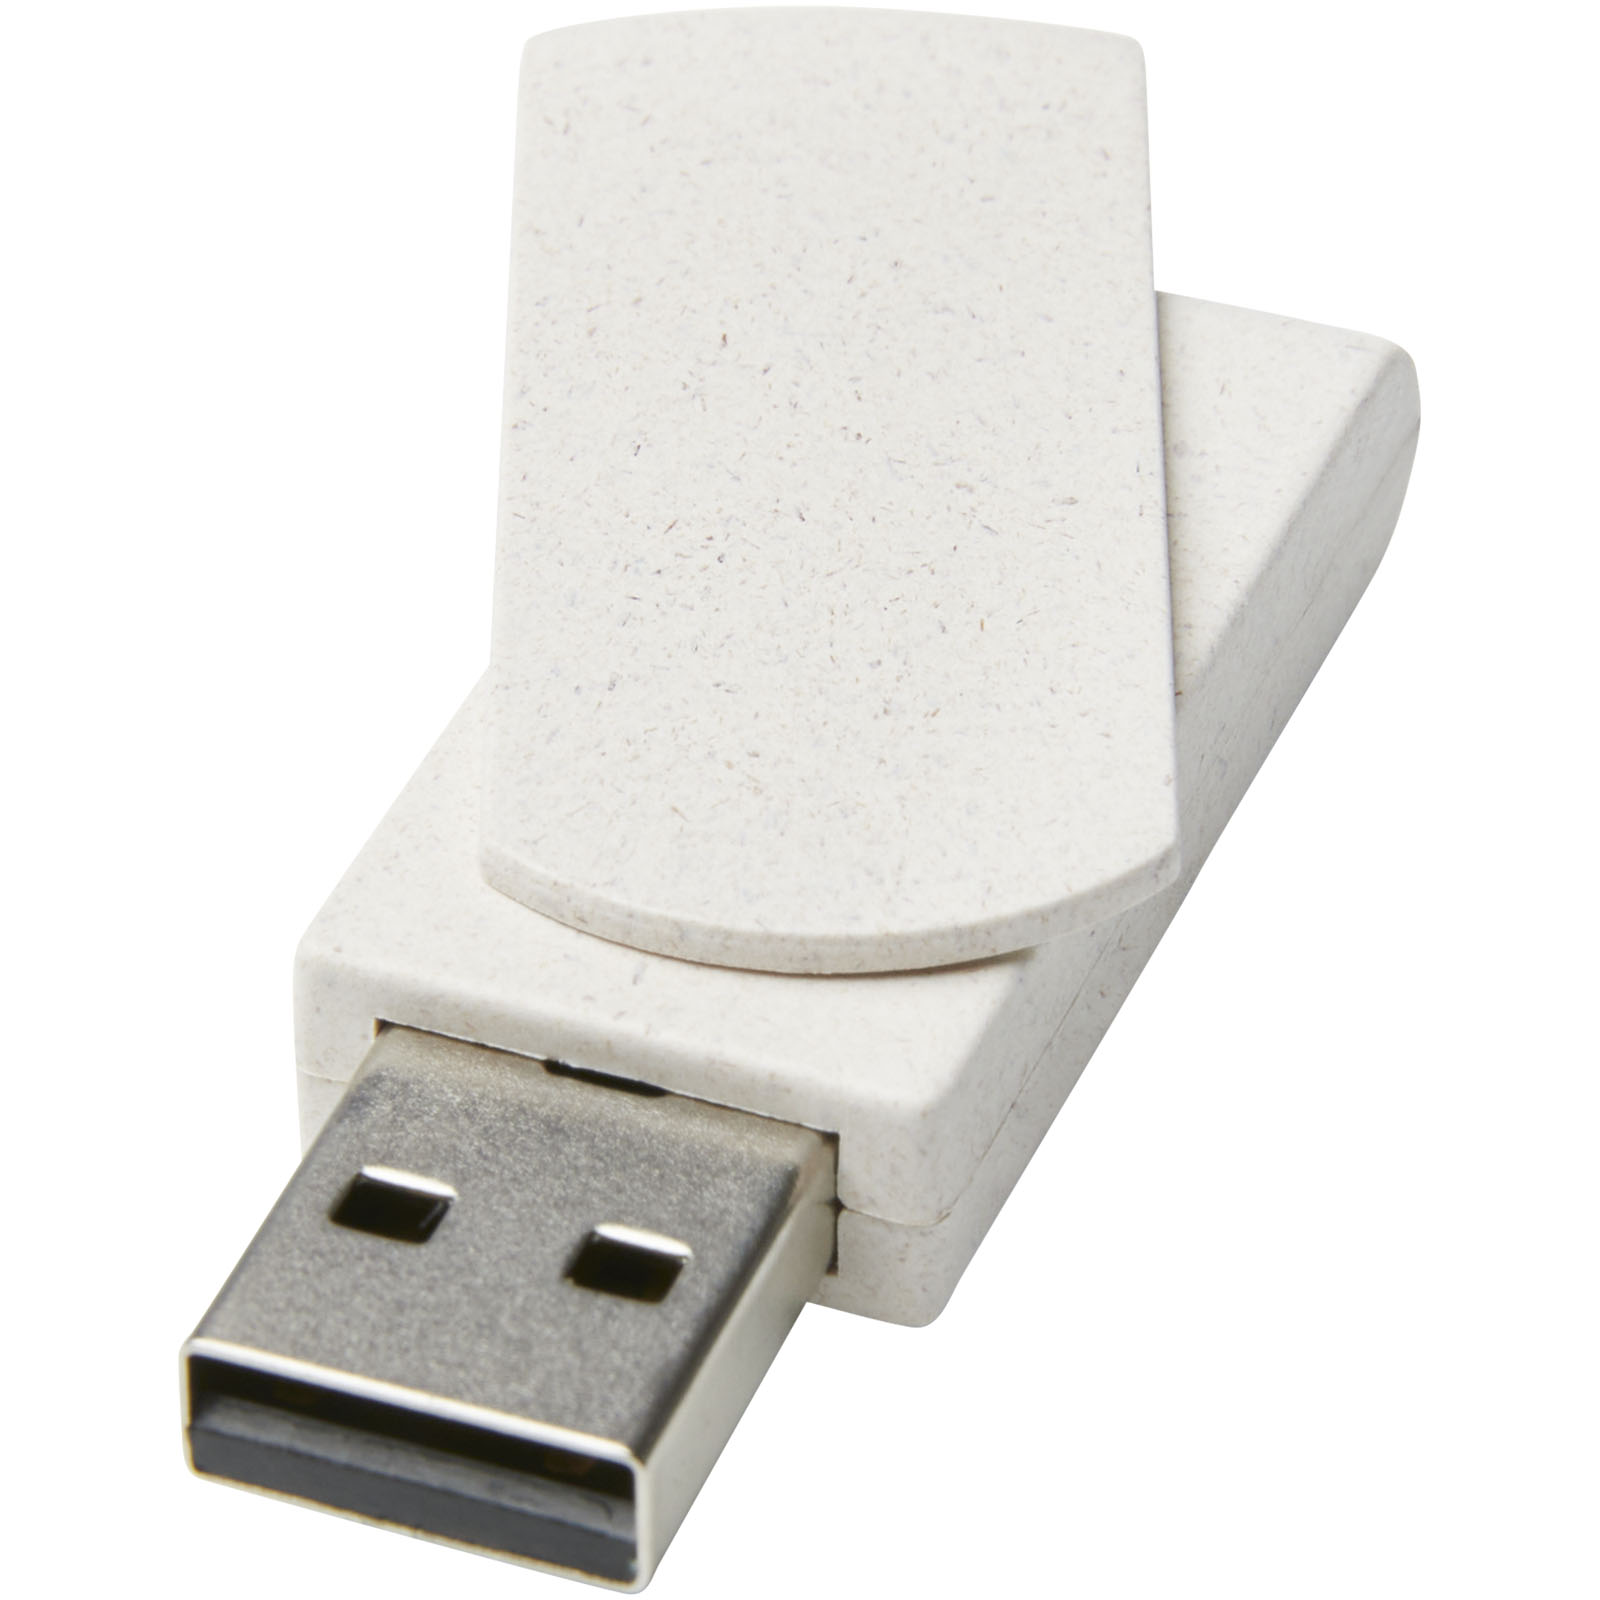 EcoStraw USB 4GB - Lauterbrunnen